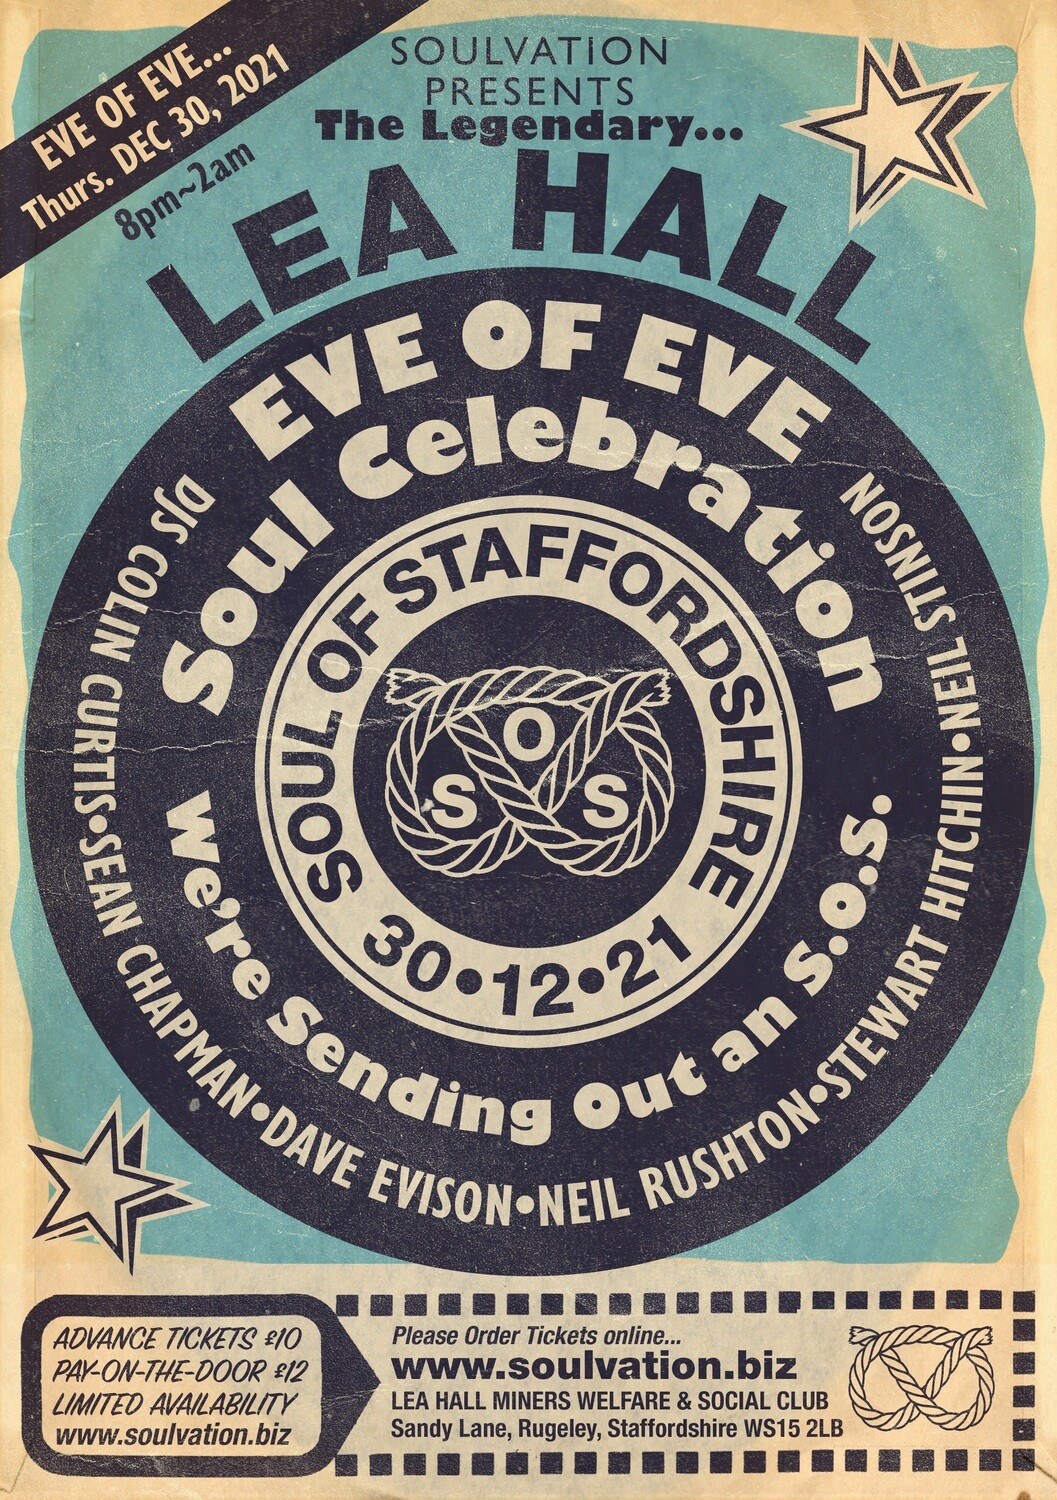 LEA HALL 'EVE OF EVE' 2021 tickets £10 plus £1 handling